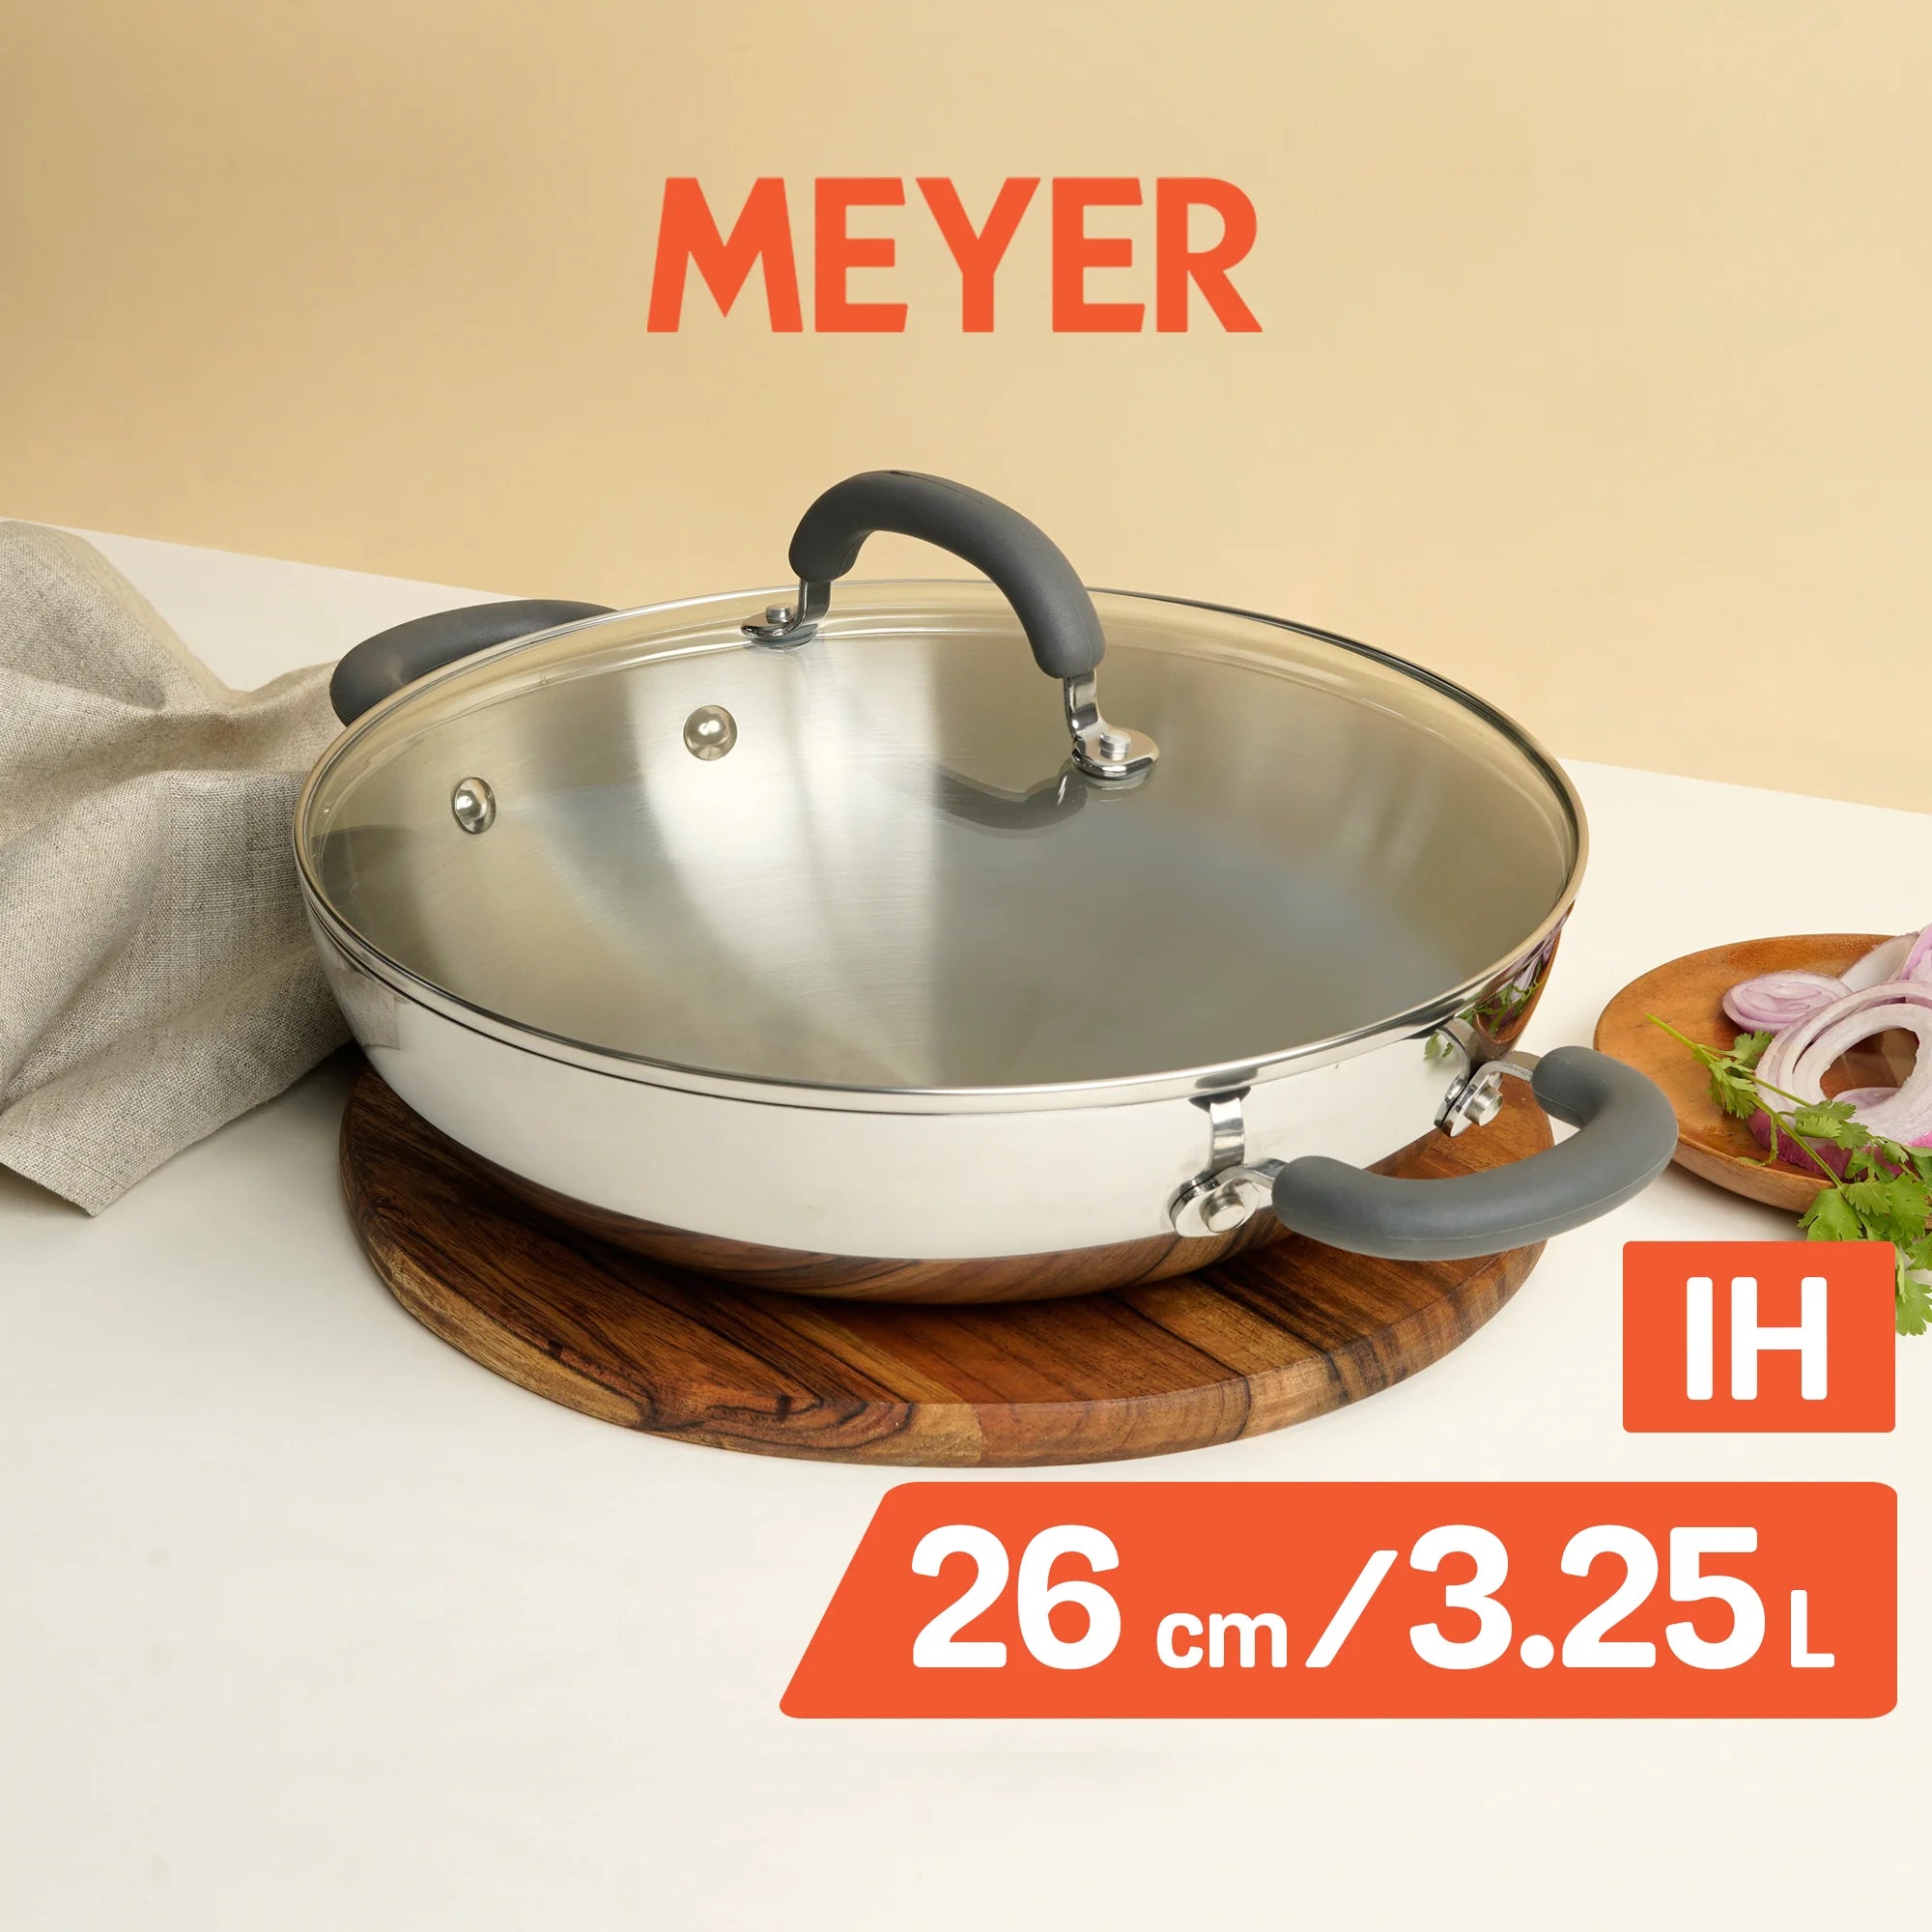 Meyer Trivantage Stainless Steel Triply Cookware Kadai/Wok with Lid, 26cm